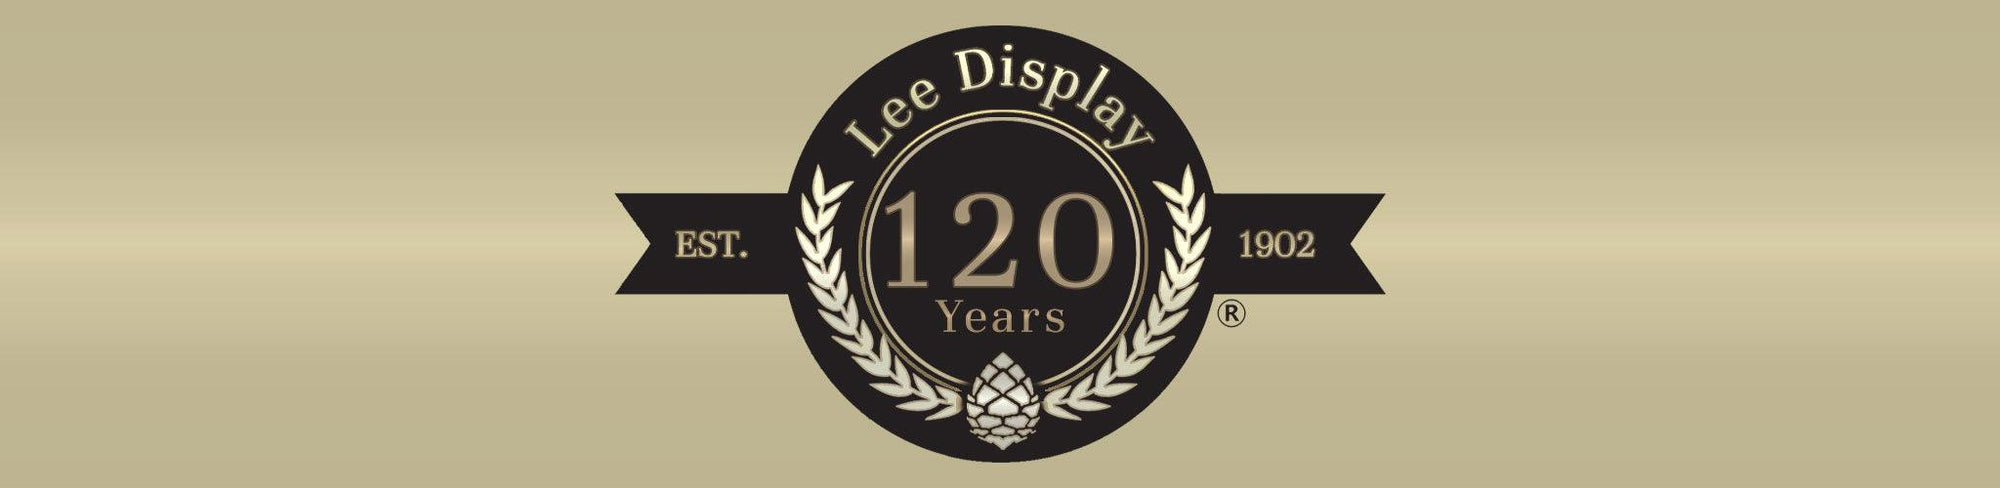 Lee Display's 120th Year Anniversary